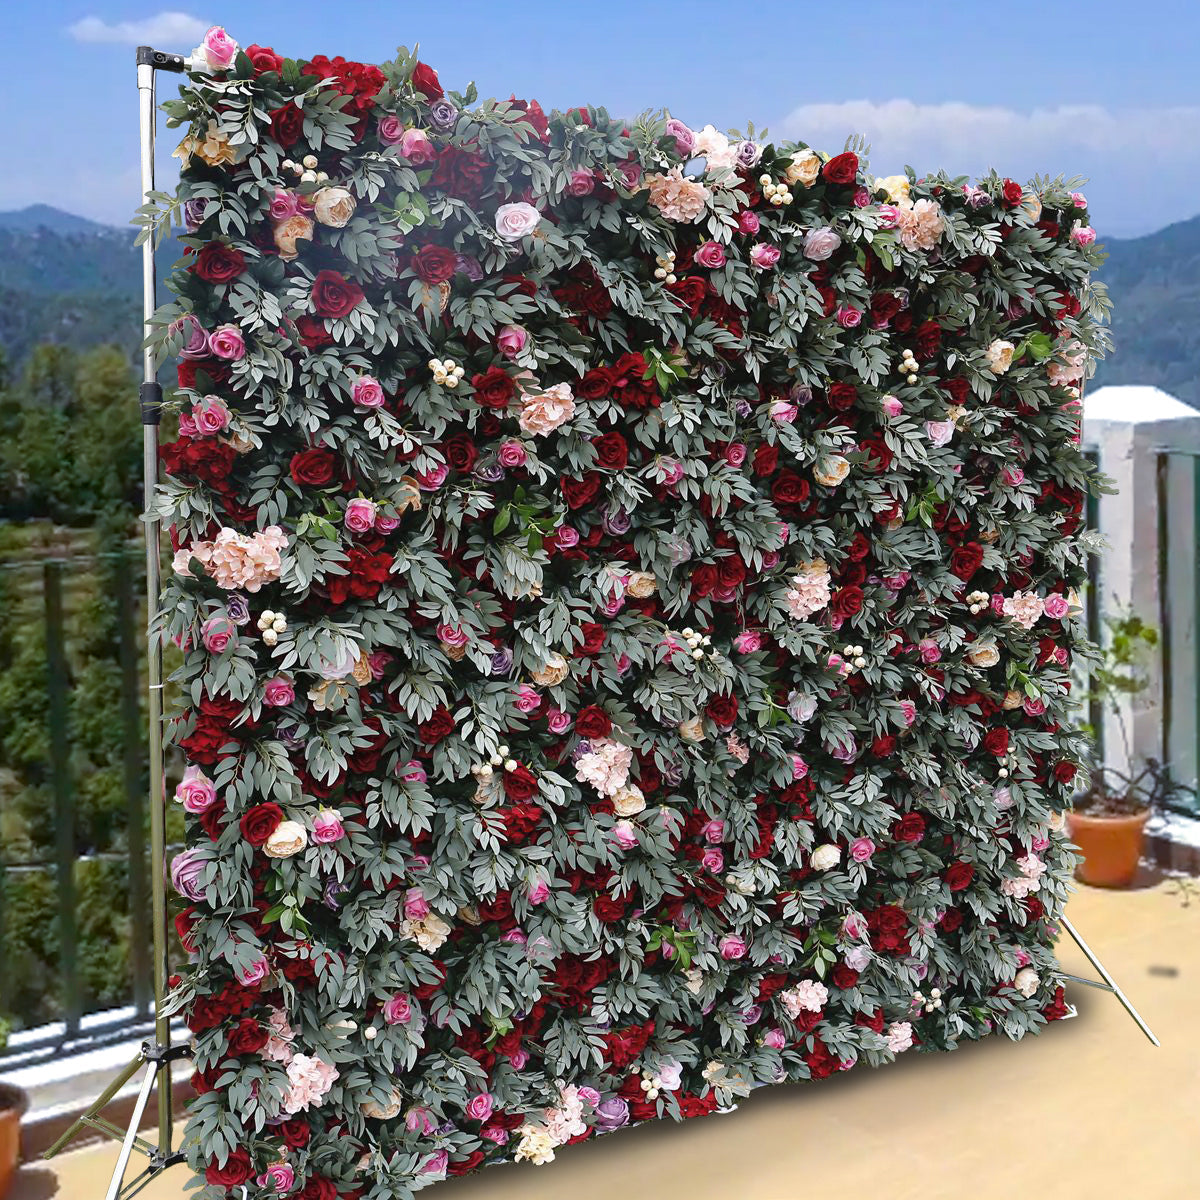 3D Artificial Flower Wall Arrangement Wedding Party Birthday Backdrop Decor HQ9028